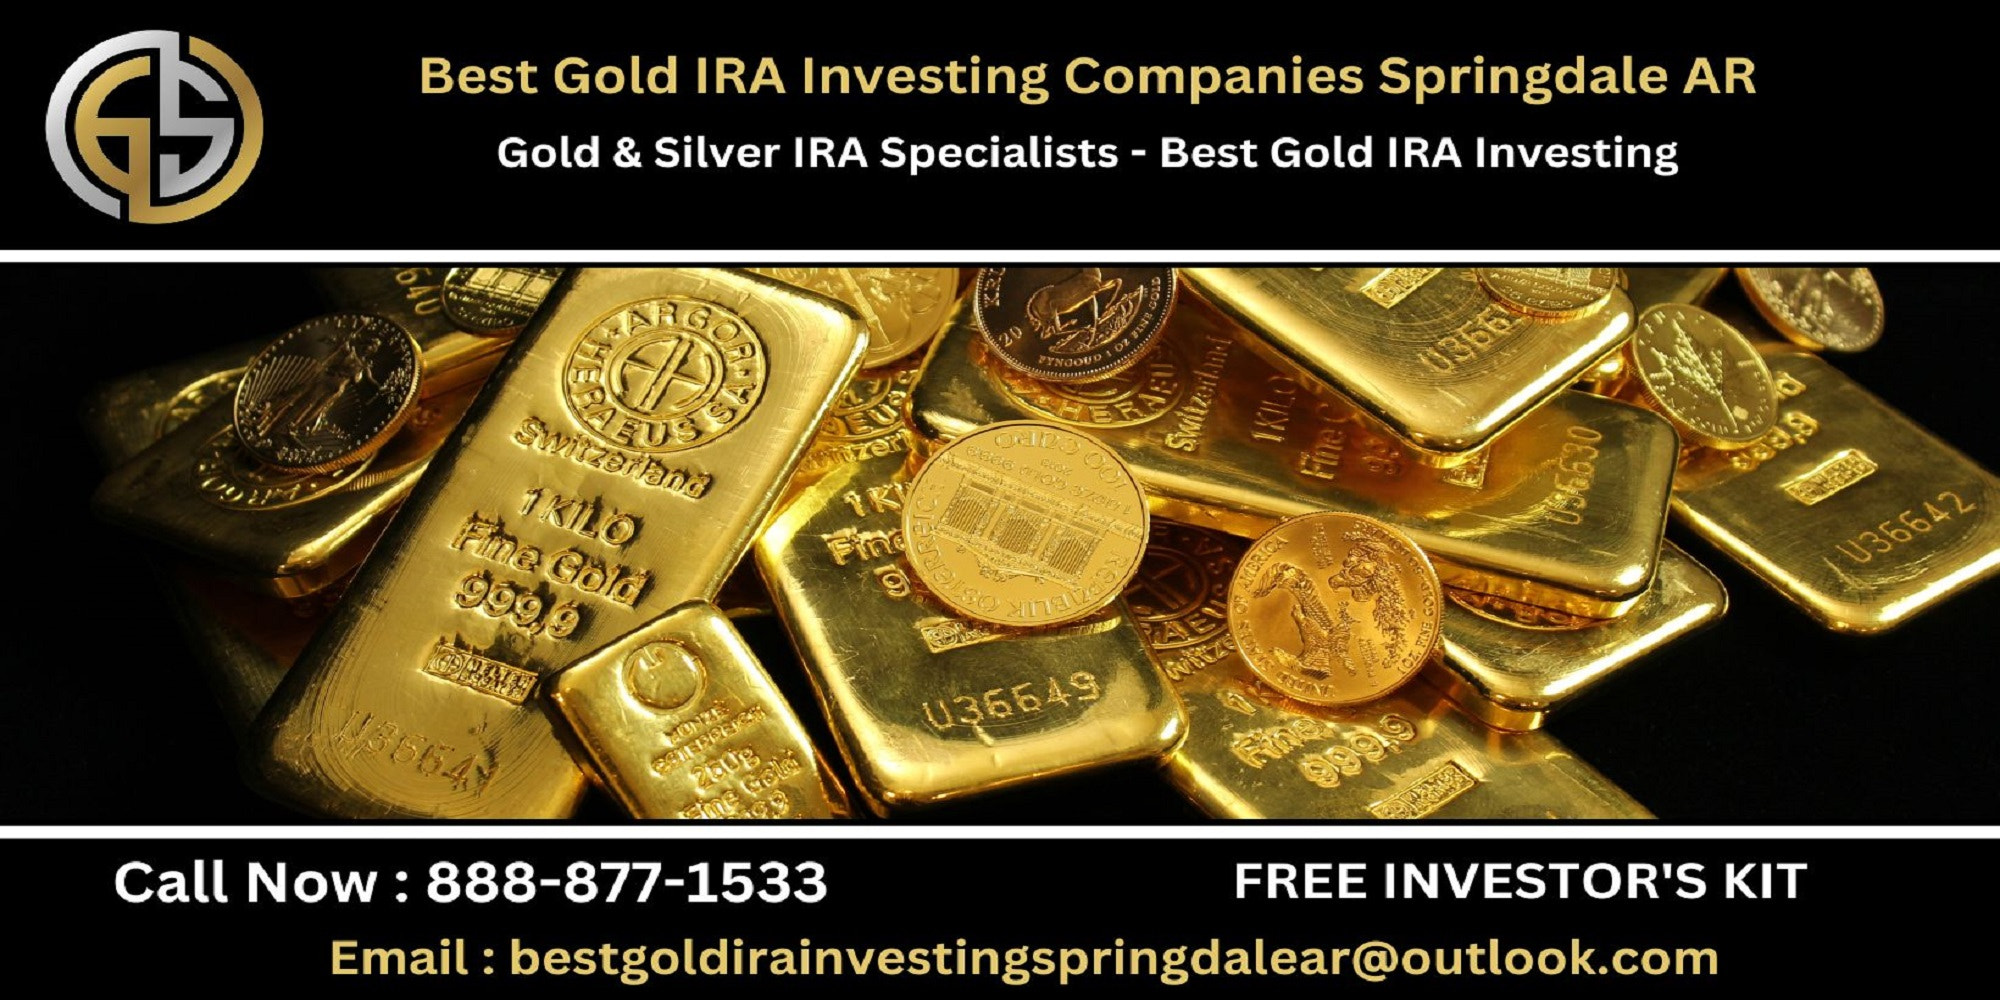 Best Gold IRA Investing Companies - 21